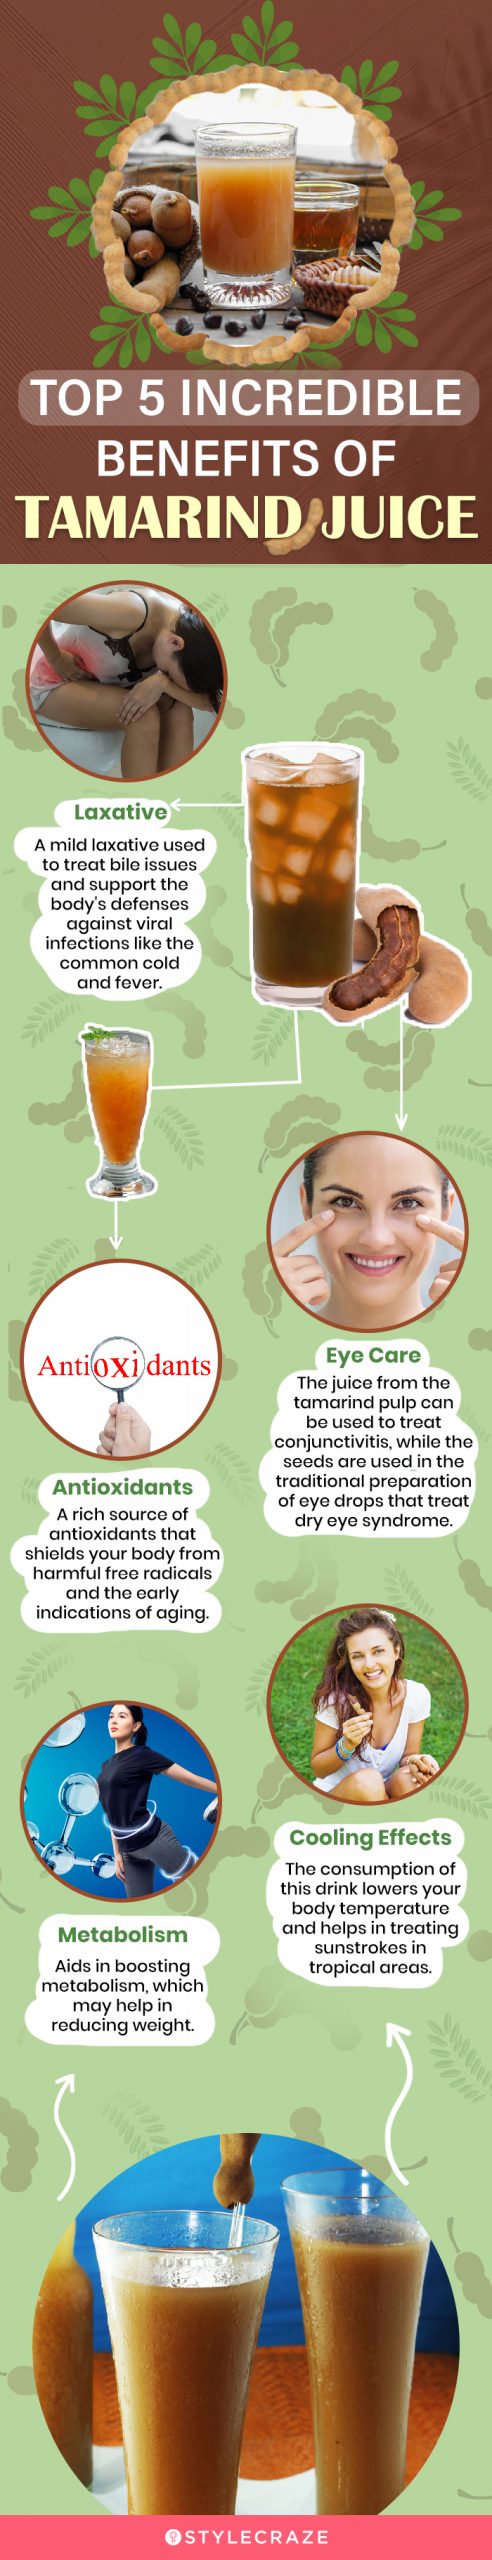 top 5 incredible benefits of tamarind juice (infographic)